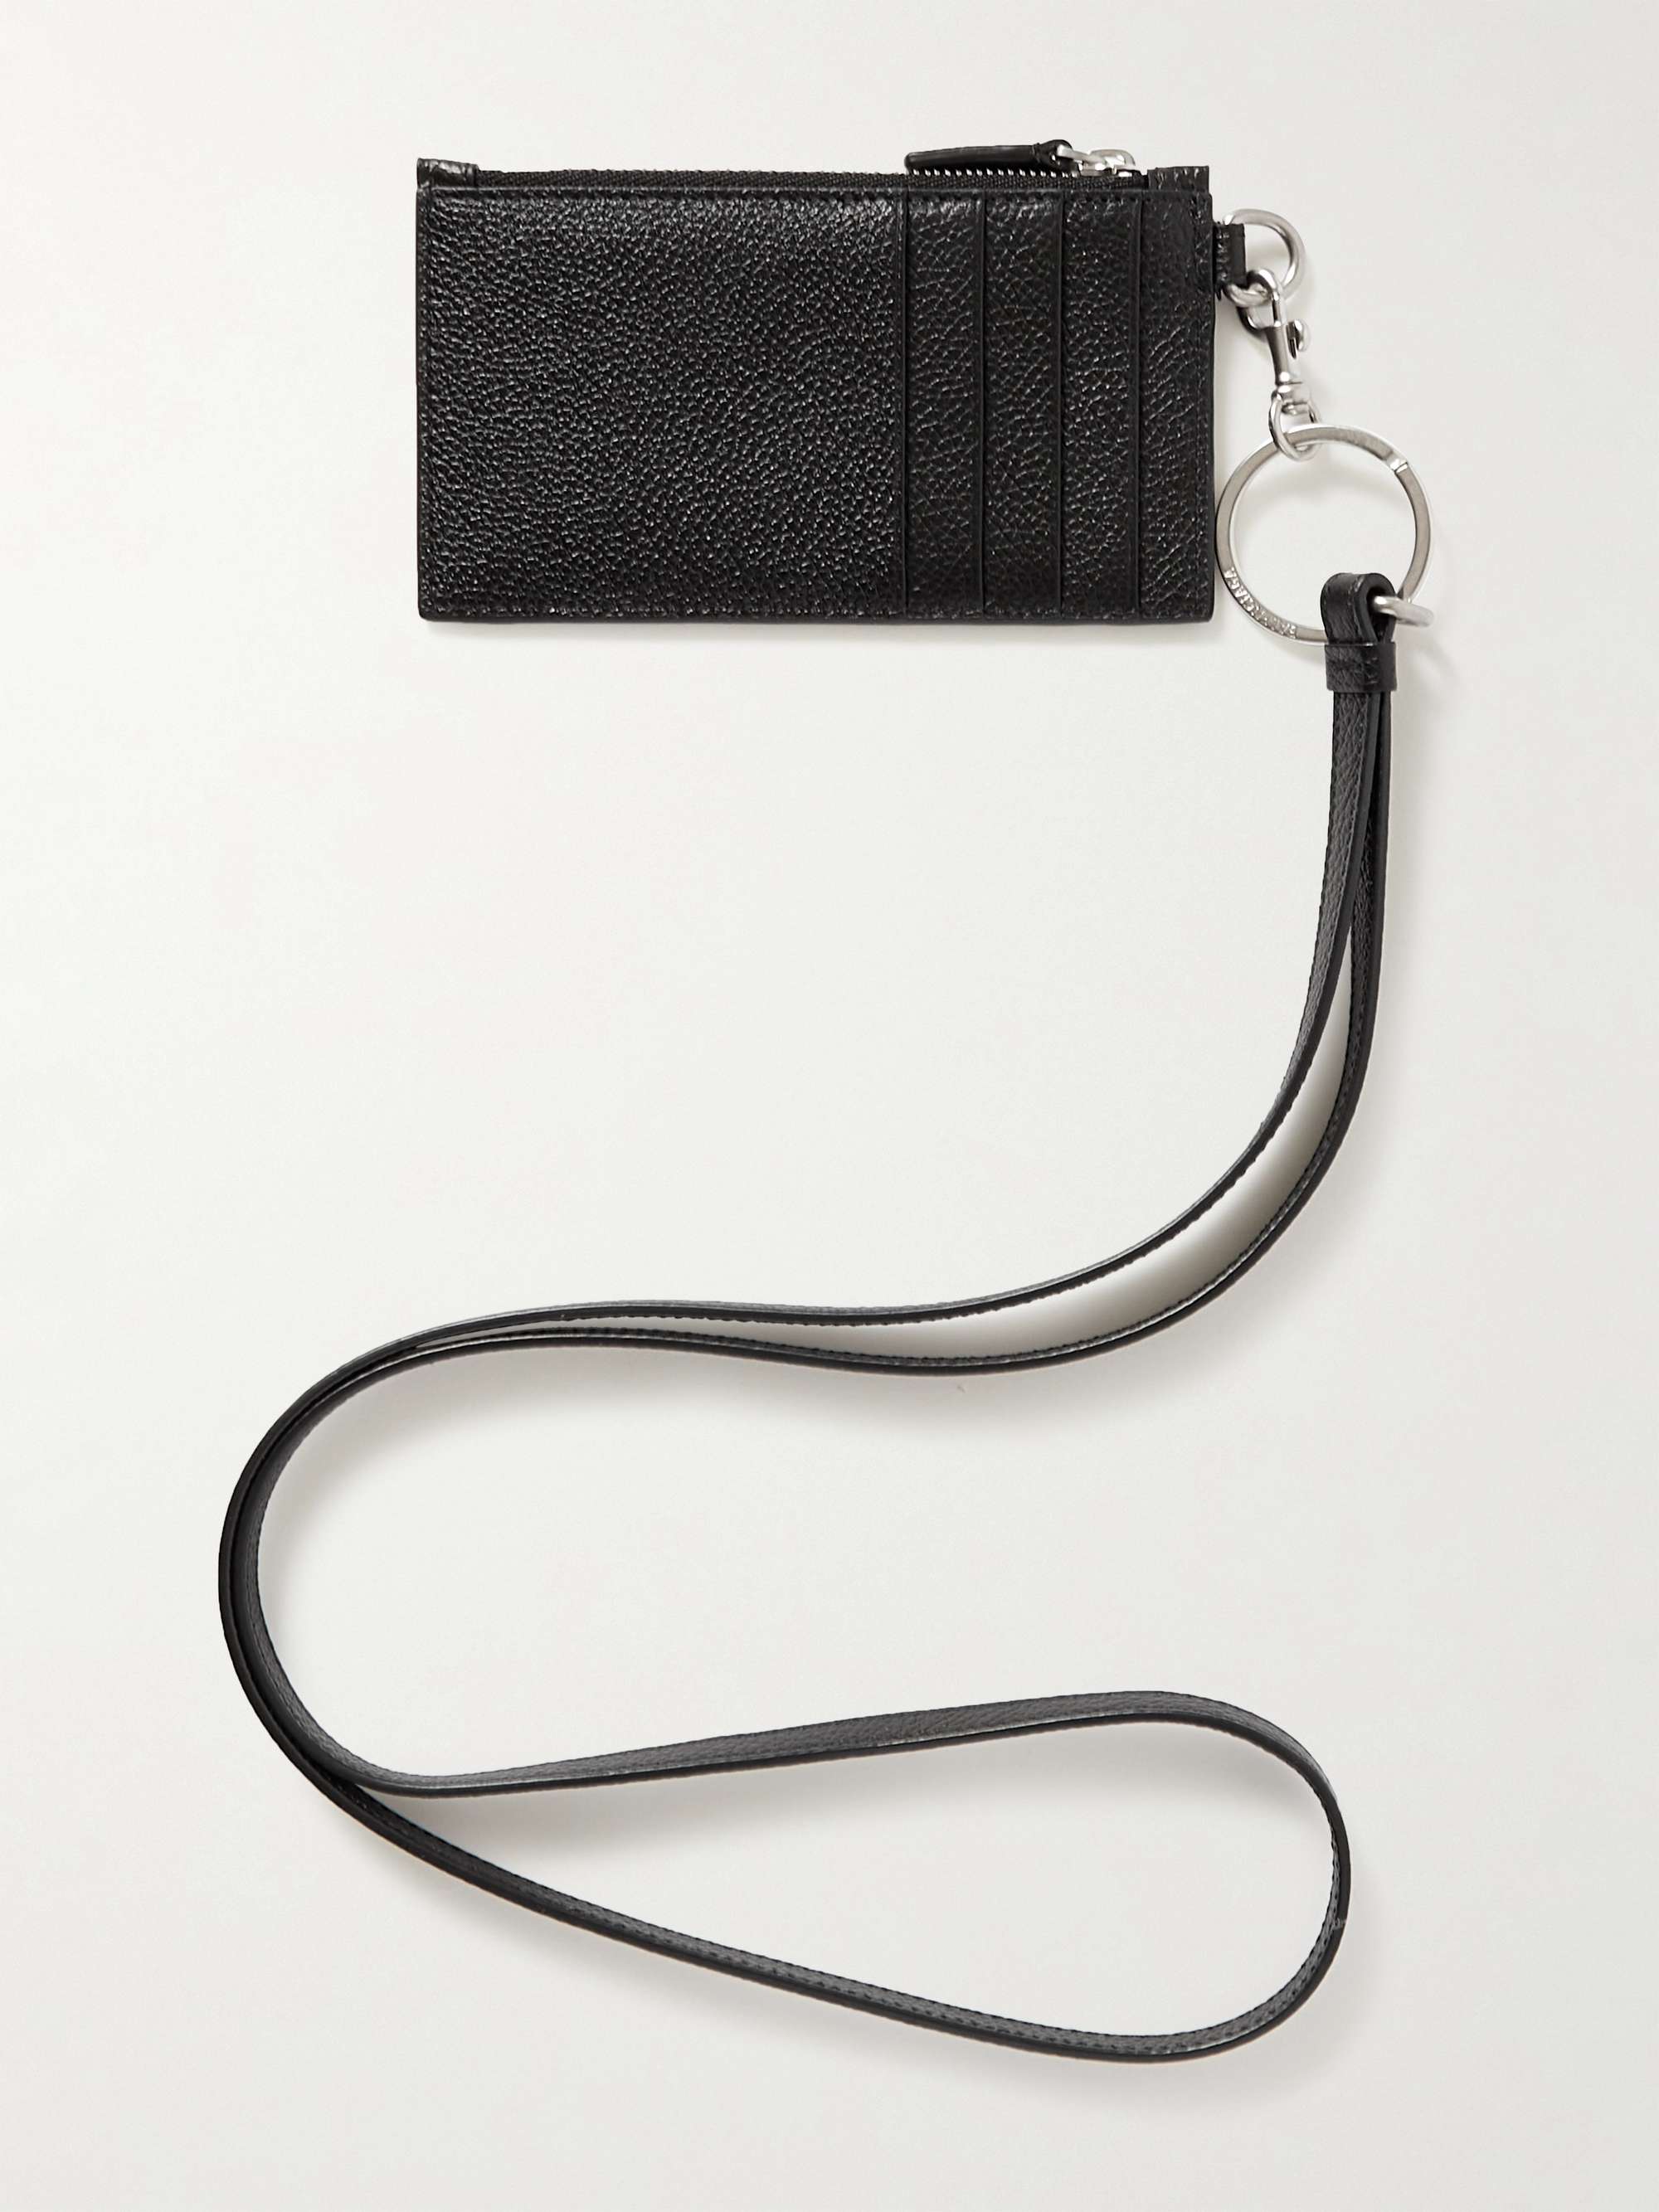 BALENCIAGA Logo-Print Full-Grain Leather Zipped Cardholder with Lanyard